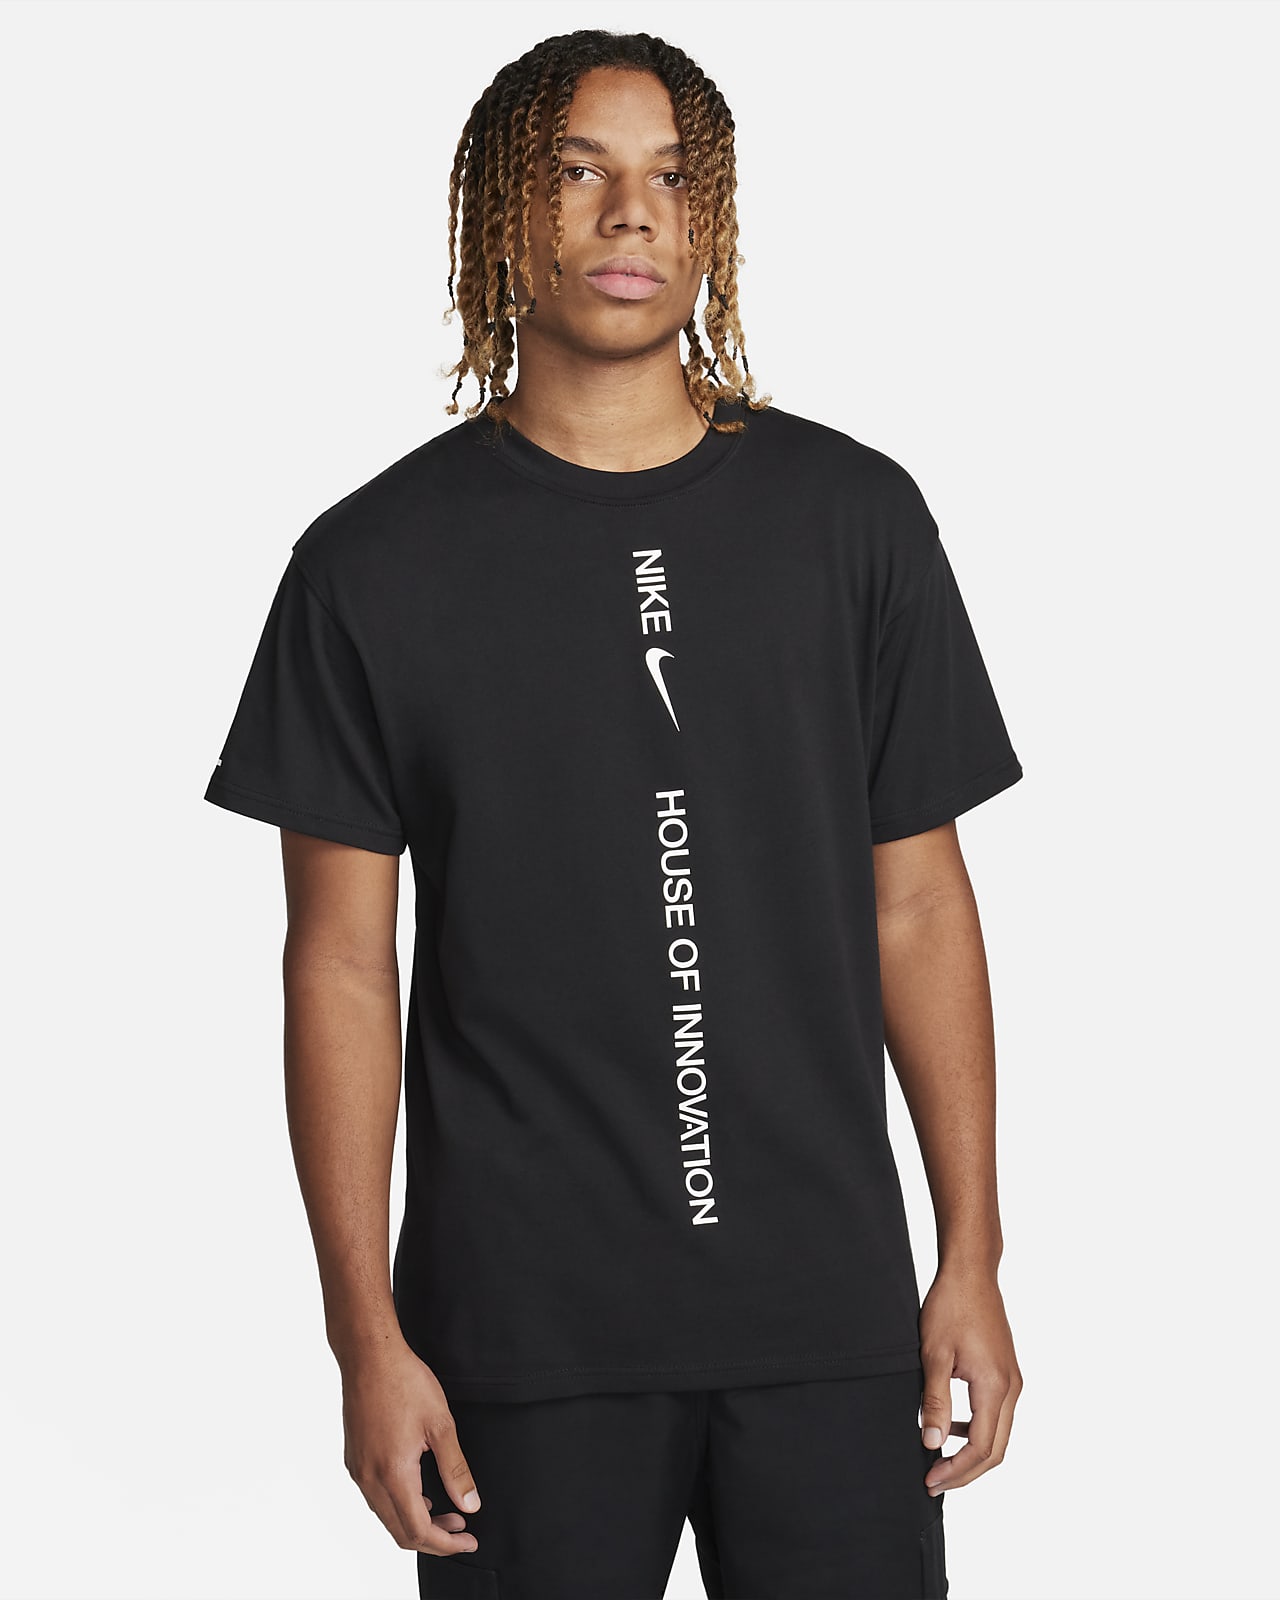 Nike Sportswear House of Innovation (Paris) T-shirt voor heren